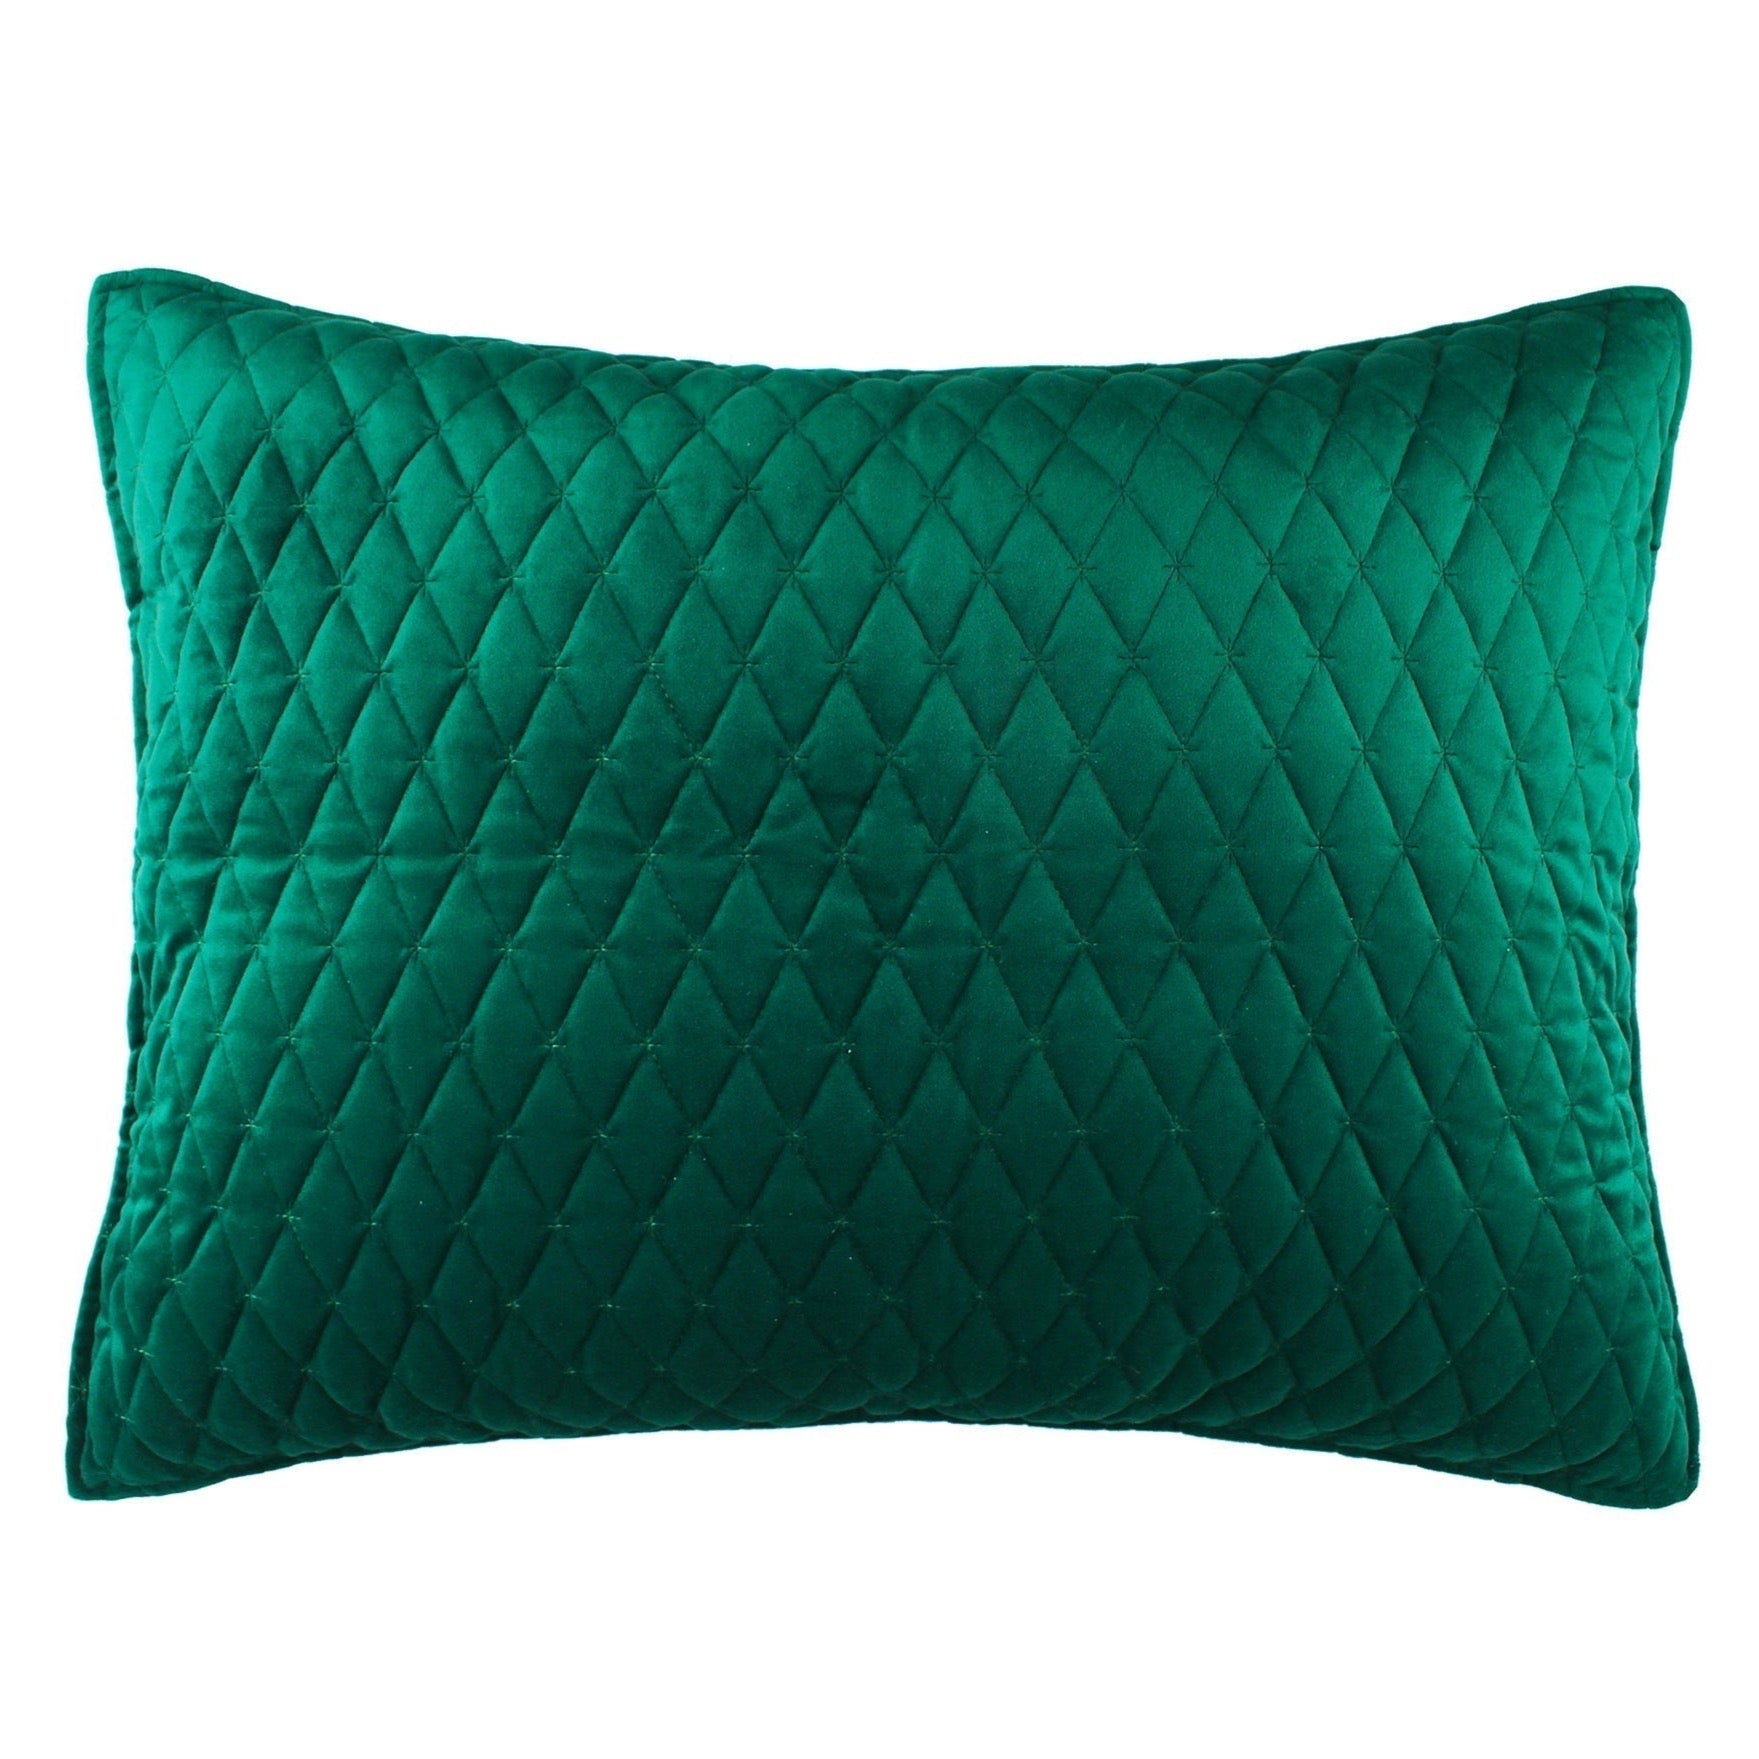 Birch Hill Empire Velvet Green Quilt - Polyester